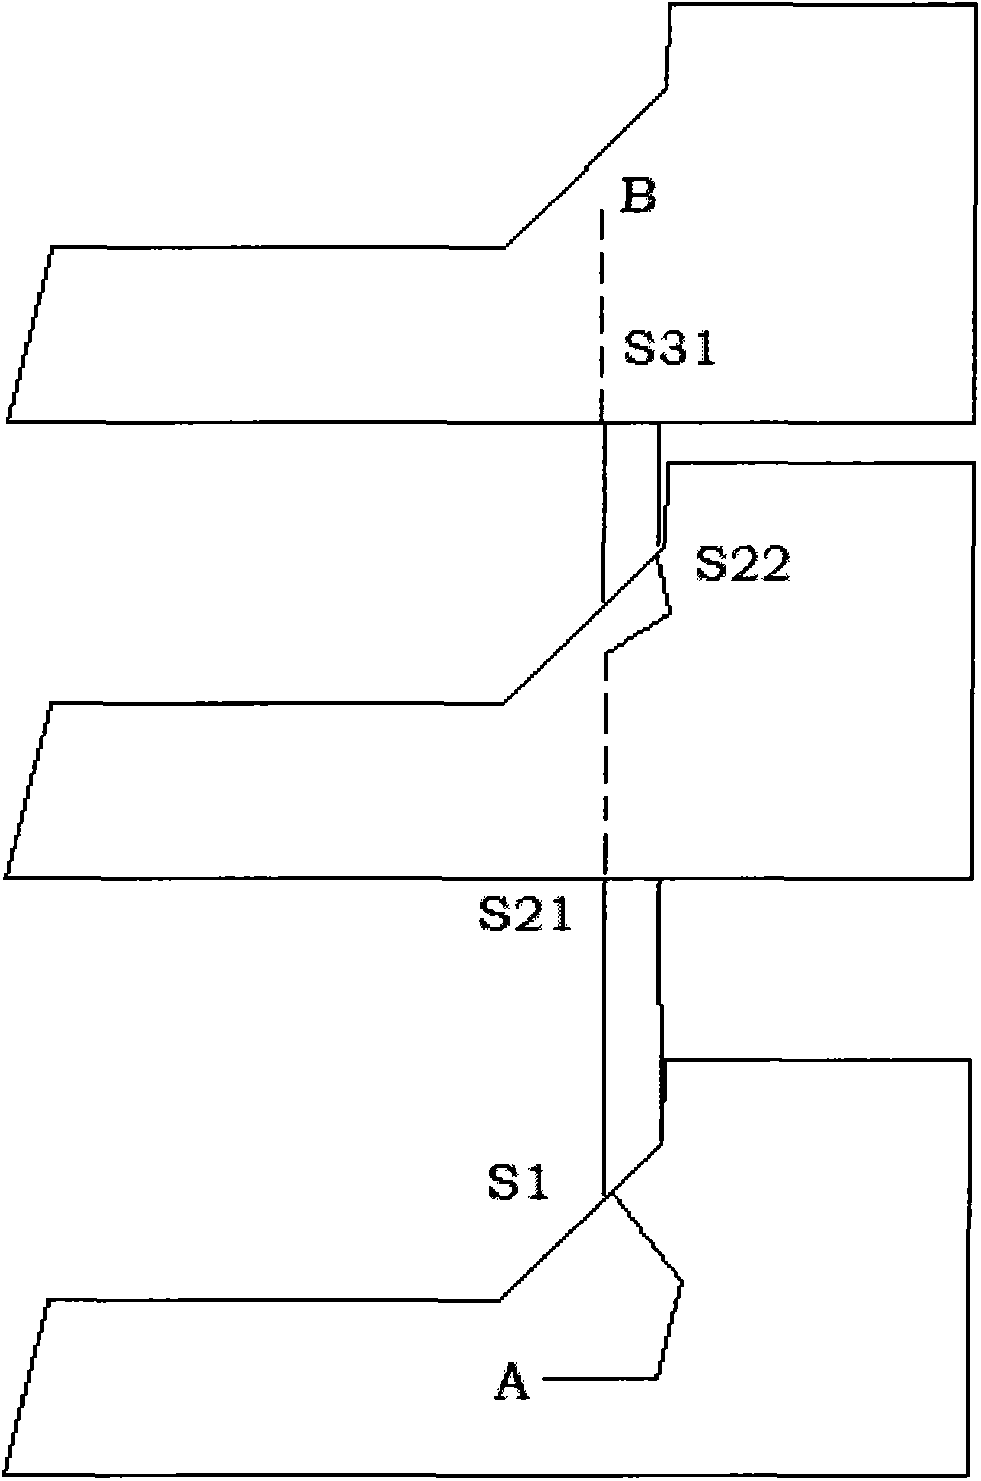 Displaying method of path across floors based on indoor map application